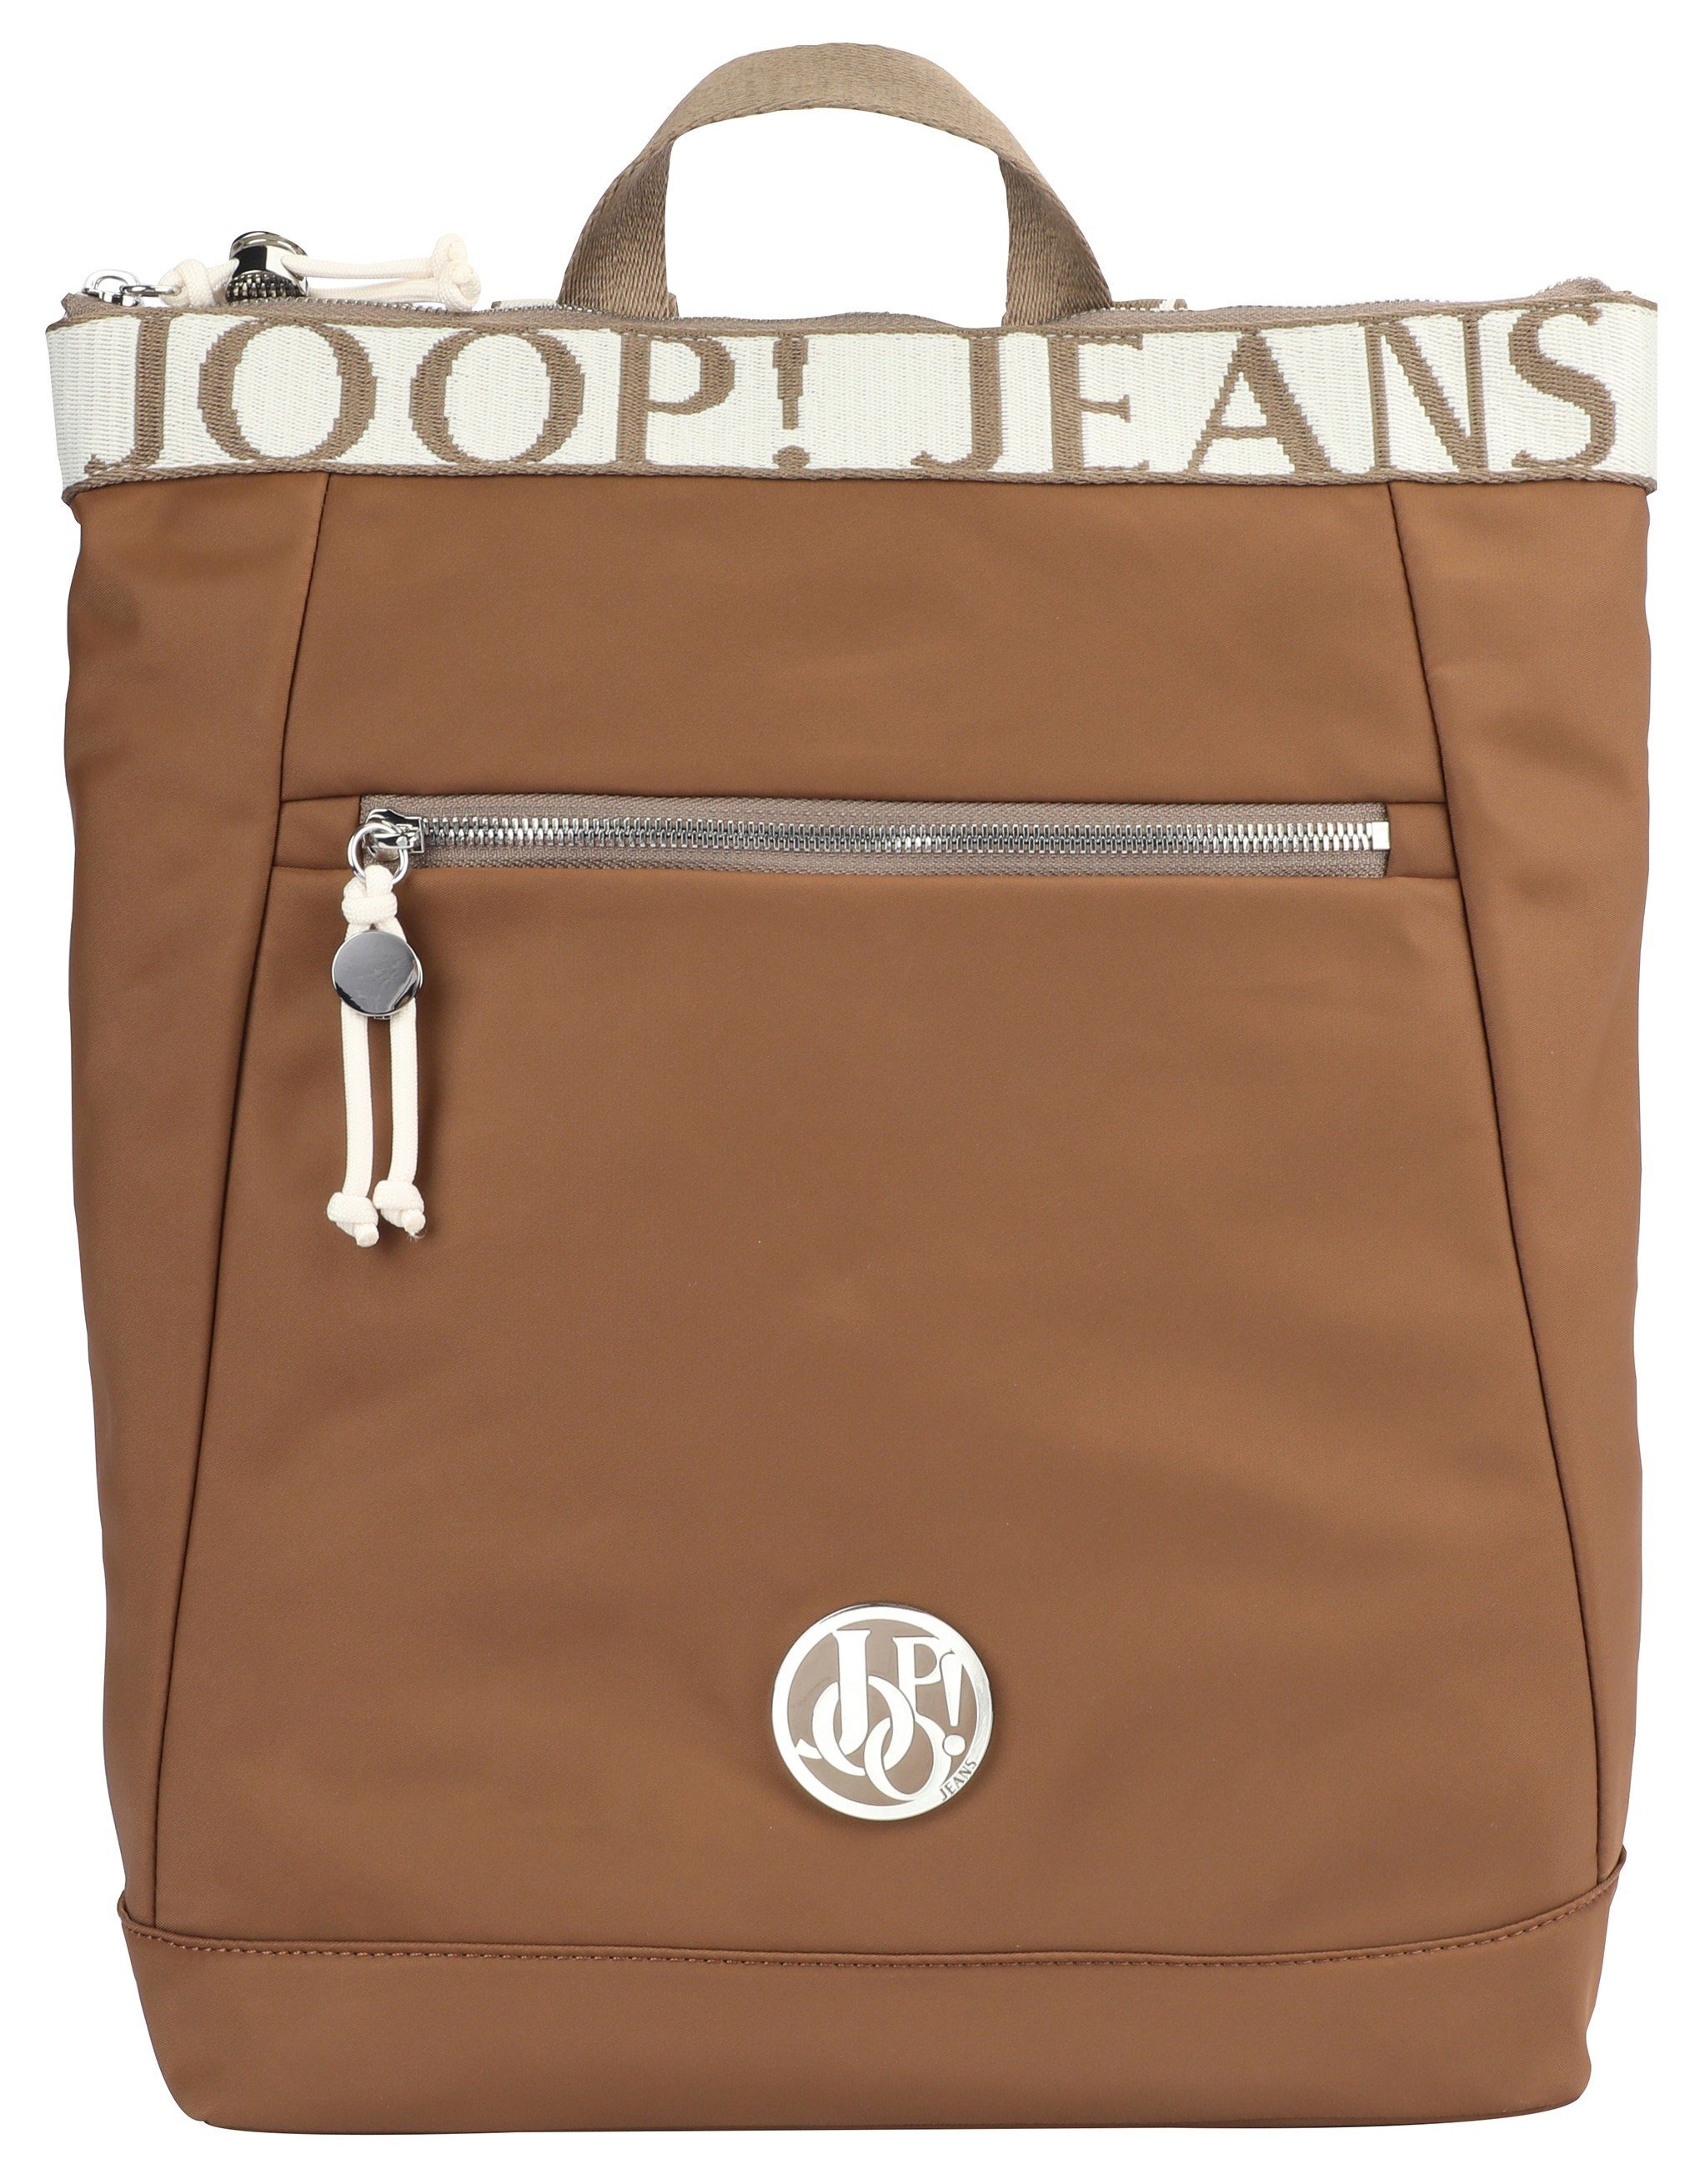 Joop! Joop Jeans Cityrucksack lietissimo elva backpack lvz, mit Logo Schriftzug auf den Trageriemen braun